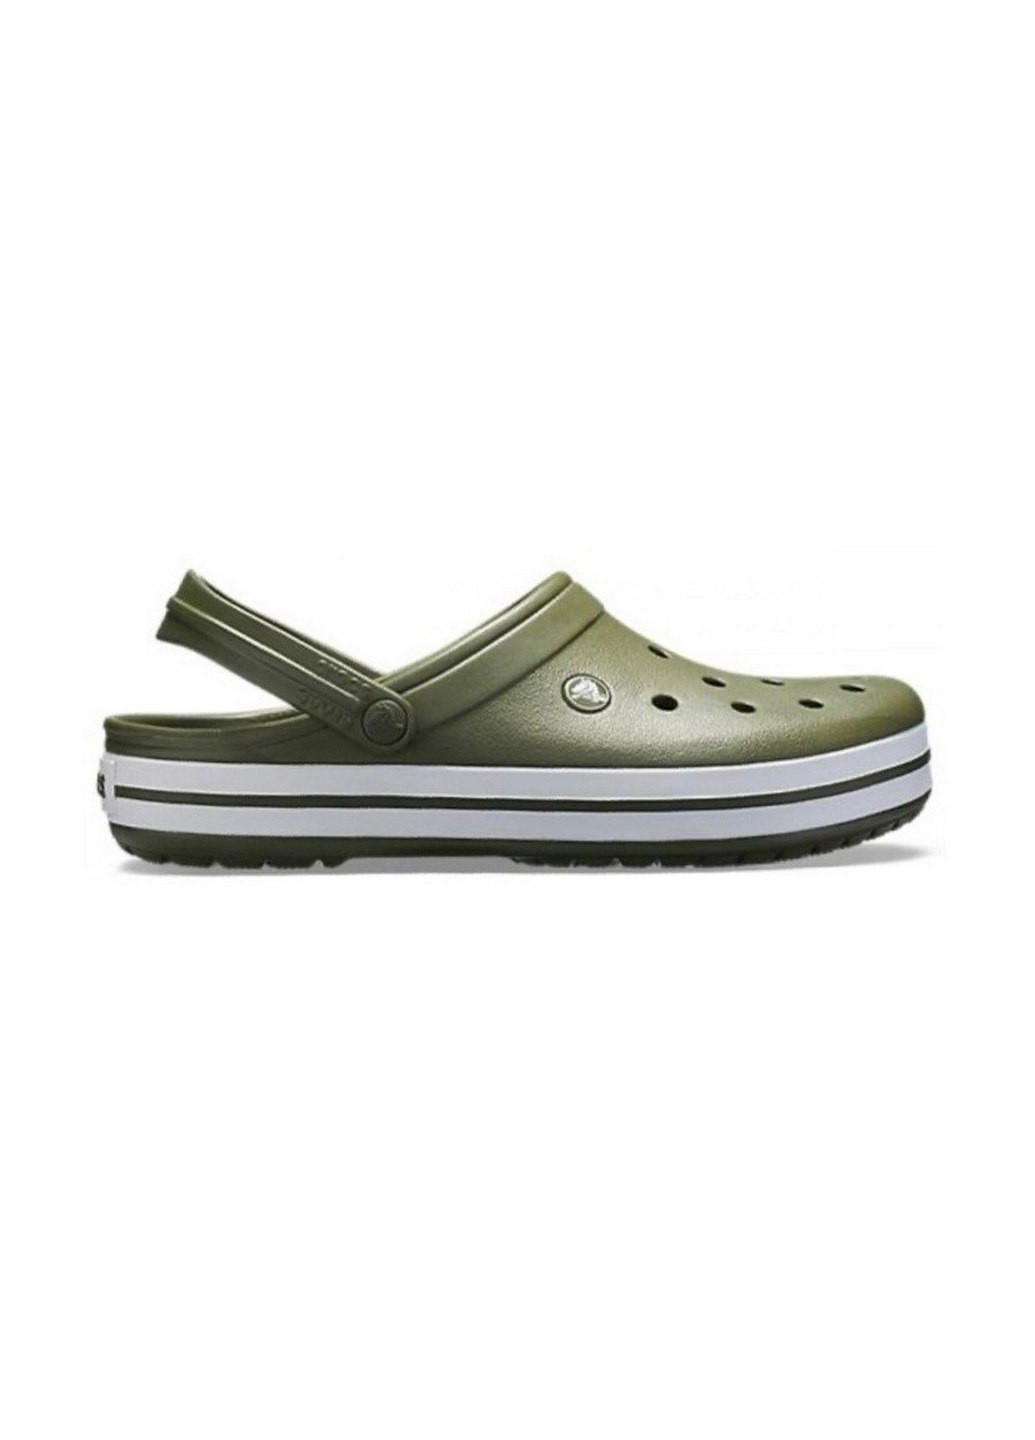 Сабо Army Green Crocs crocband (277821149)